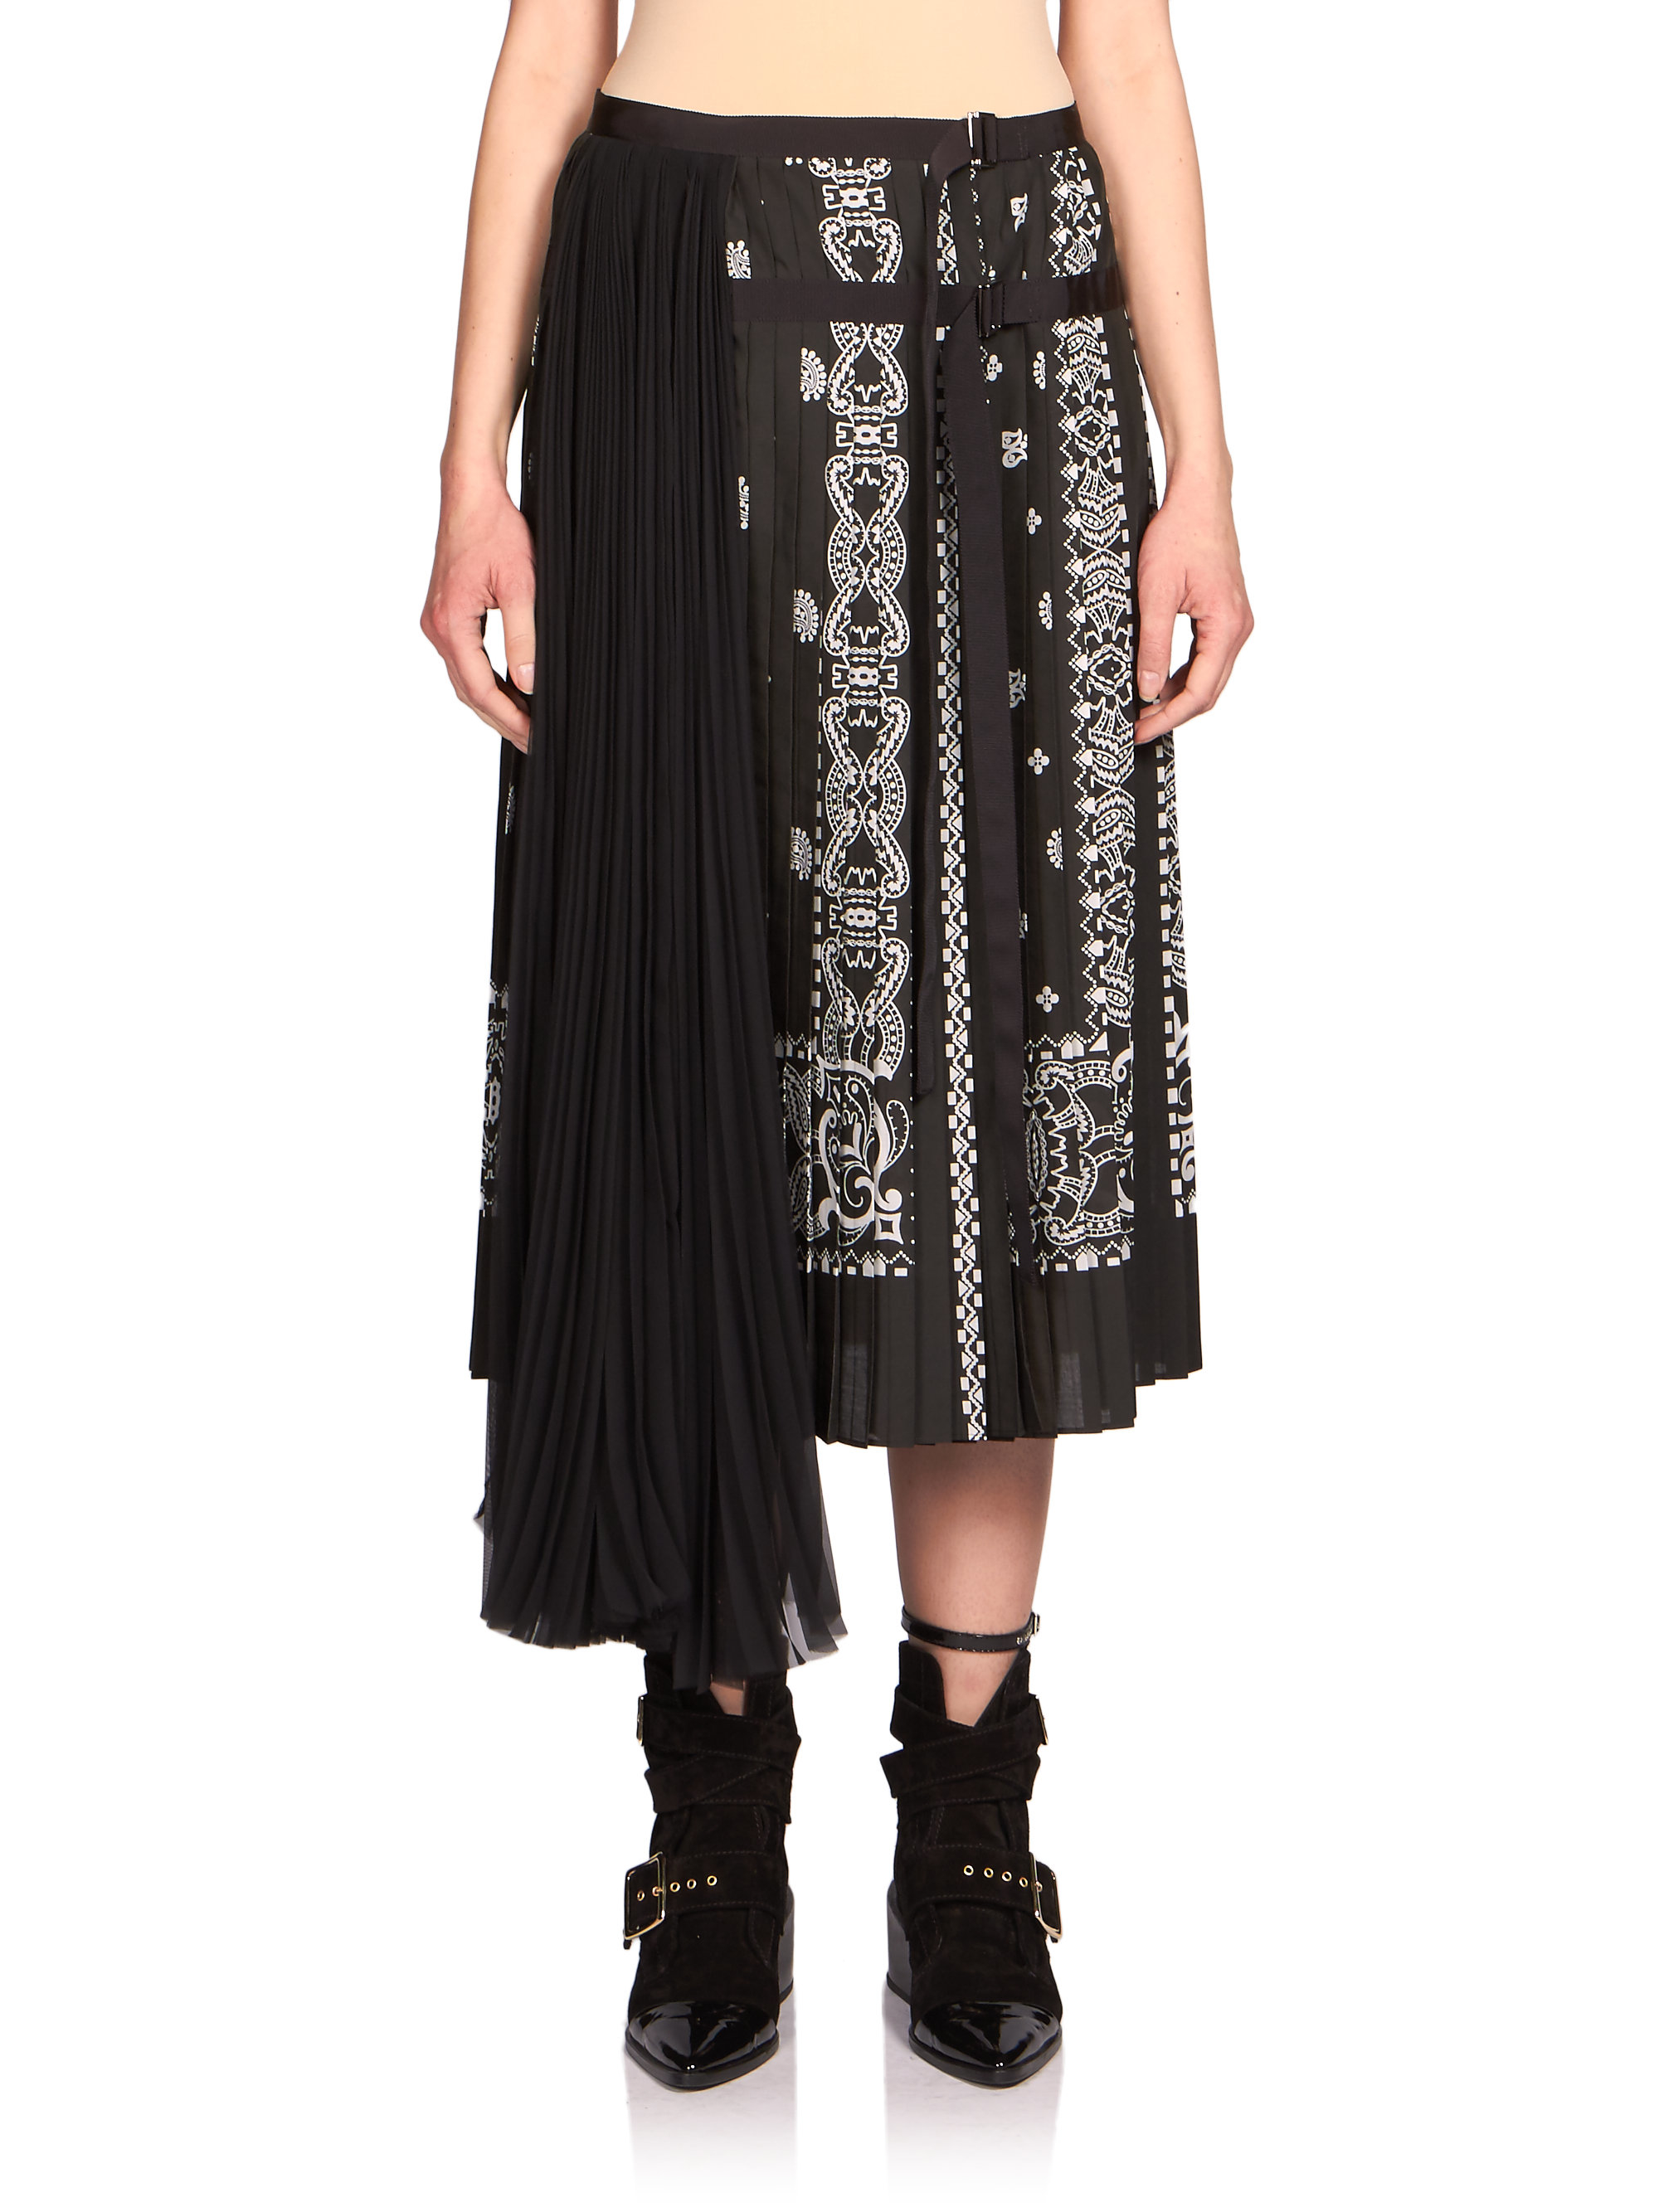 Lyst - Sacai Asymmetrical Bandana-print Skirt in Black